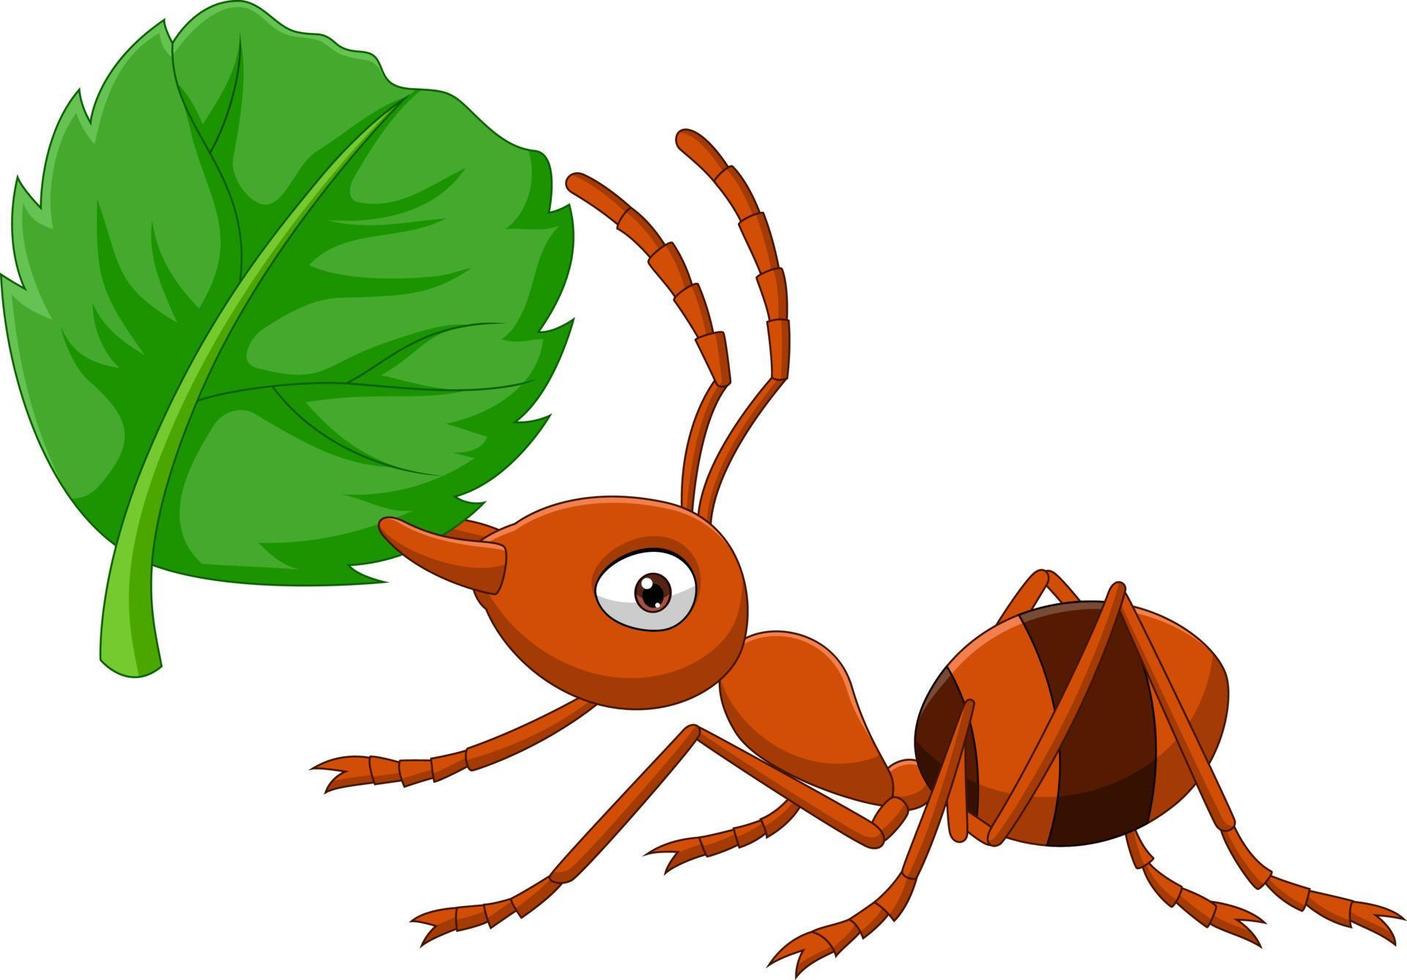 fourmi de dessin animé avec feuille verte vecteur